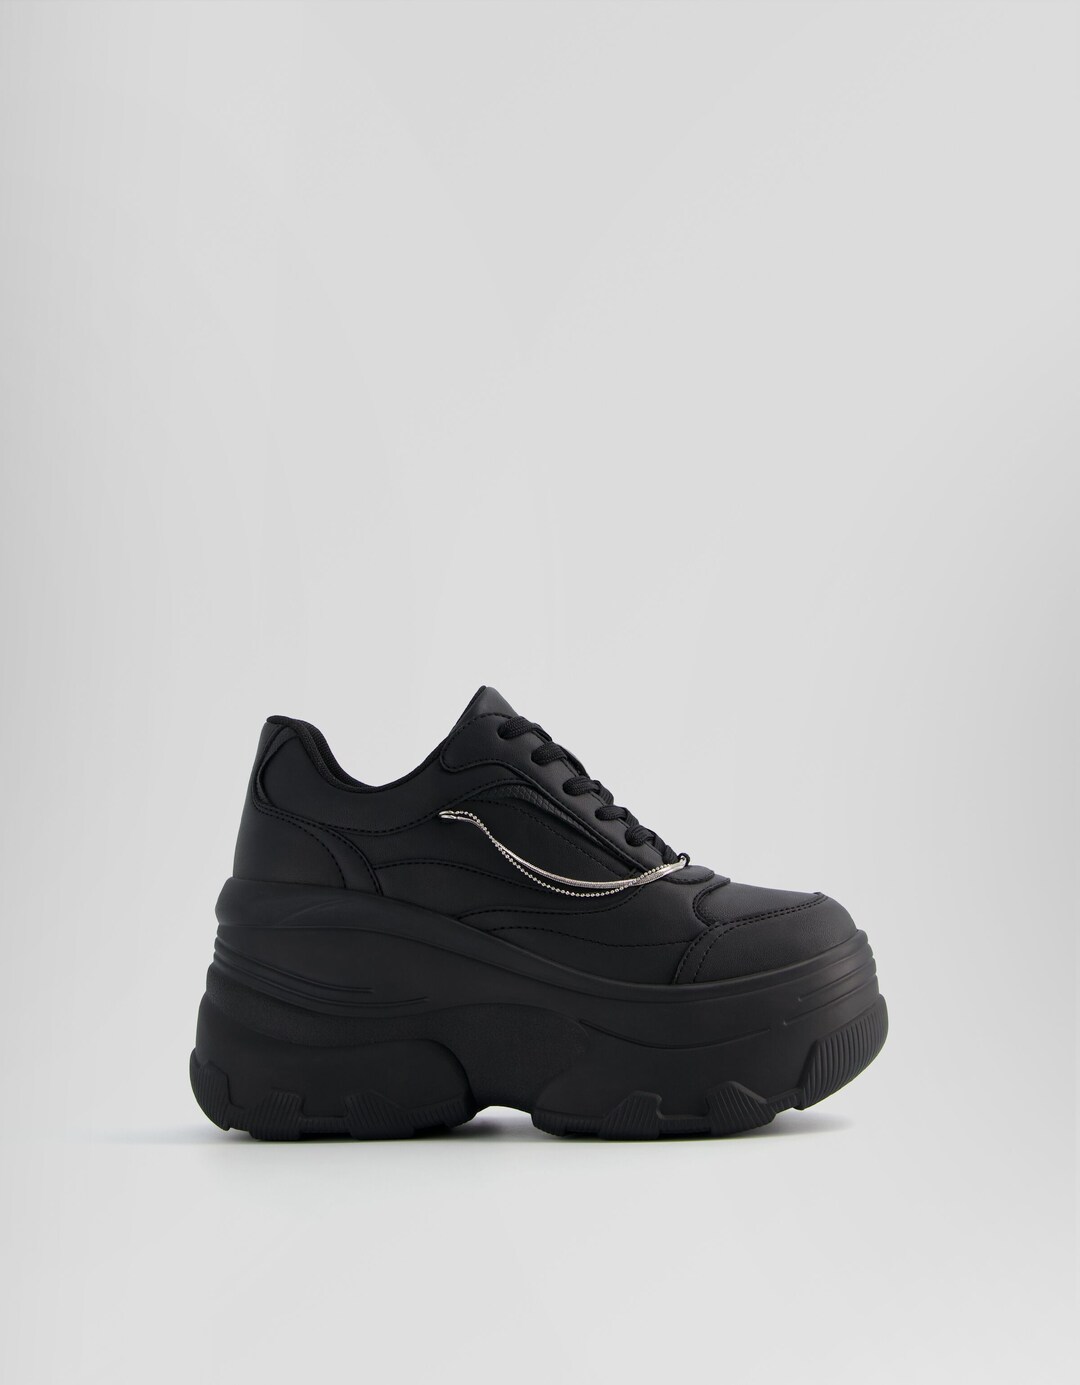 XL platform sneakers with rhinestone detail